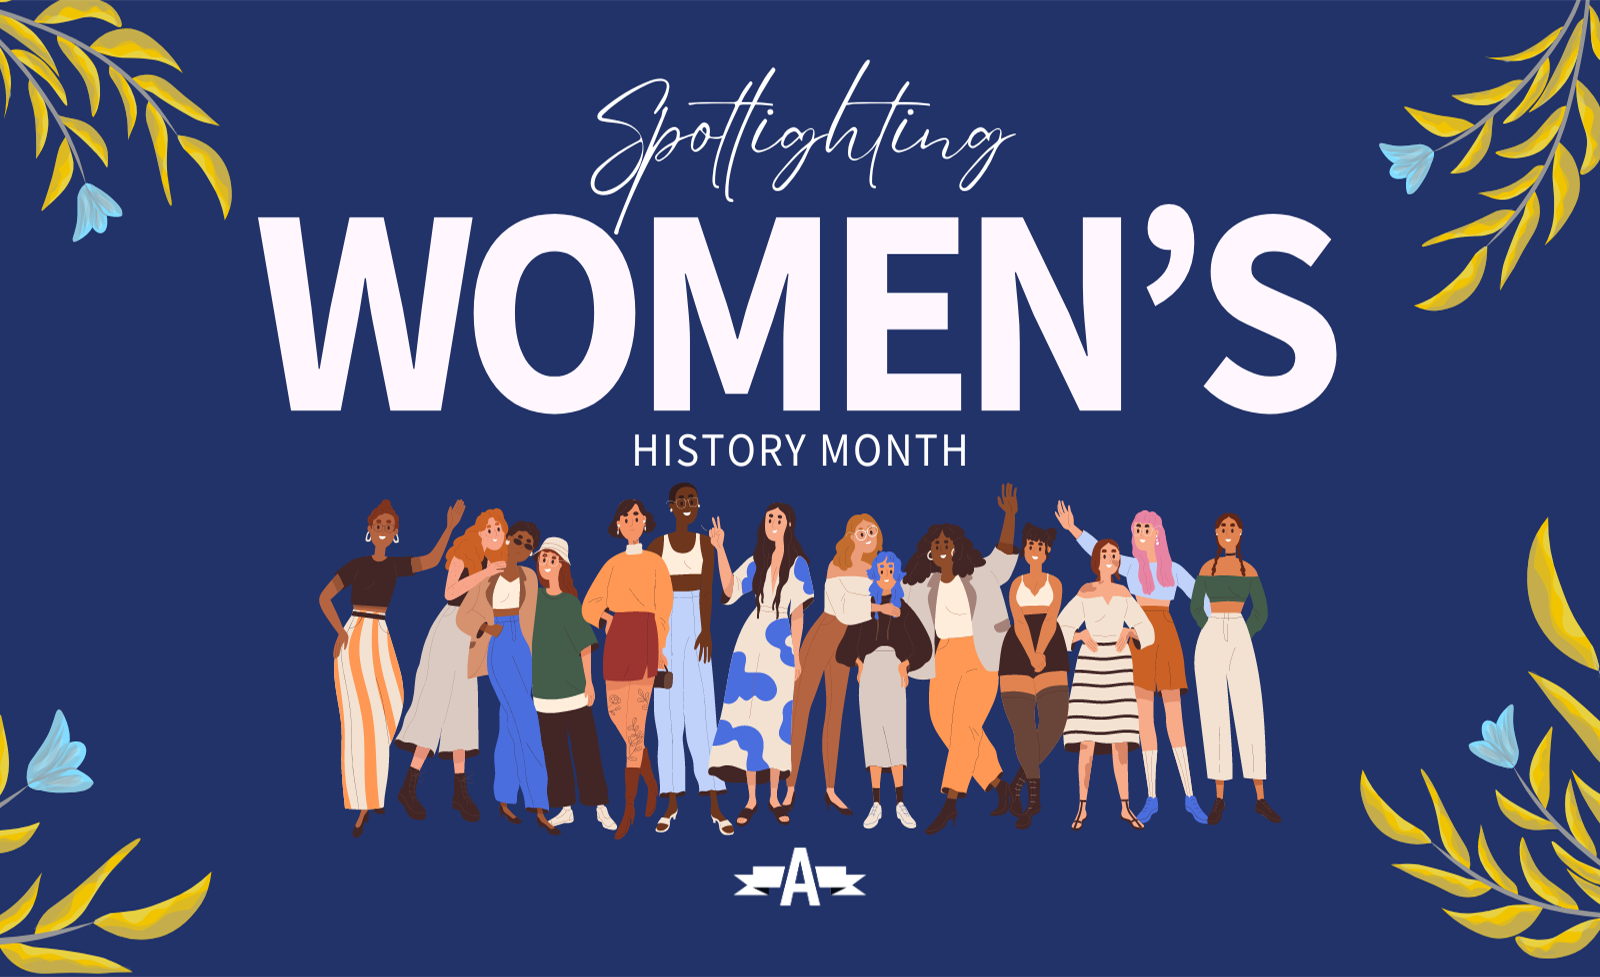 Spotlighting Women's History Month – SBA's Office of Advocacy